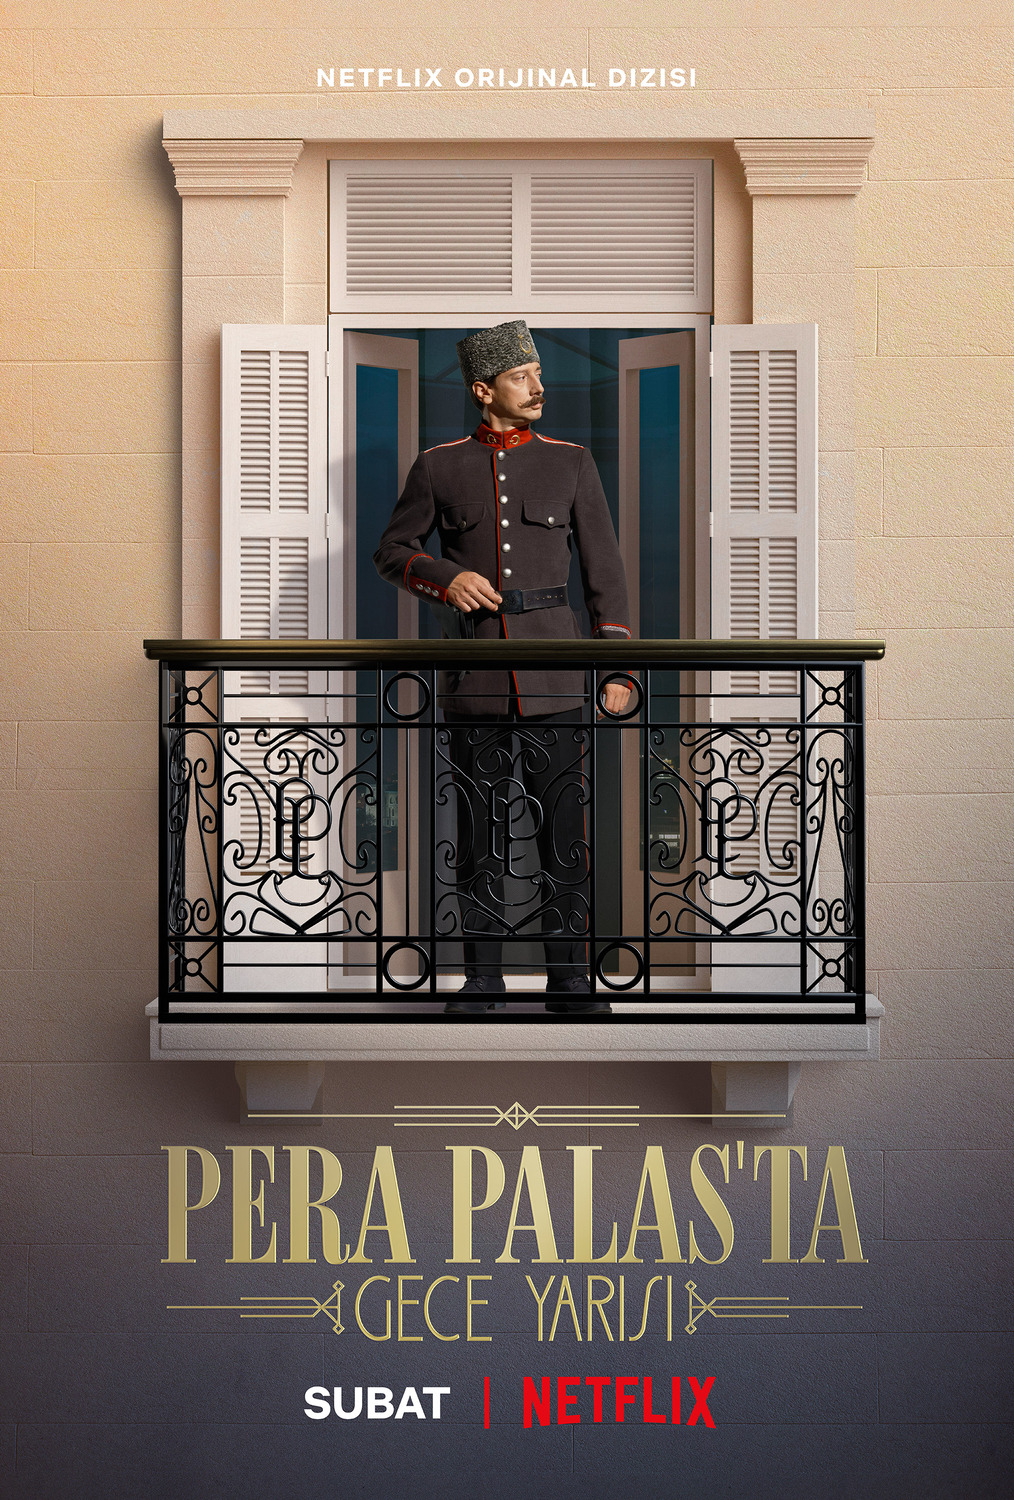 Extra Large TV Poster Image for Pera Palas'ta Gece Yarisi (#9 of 10)